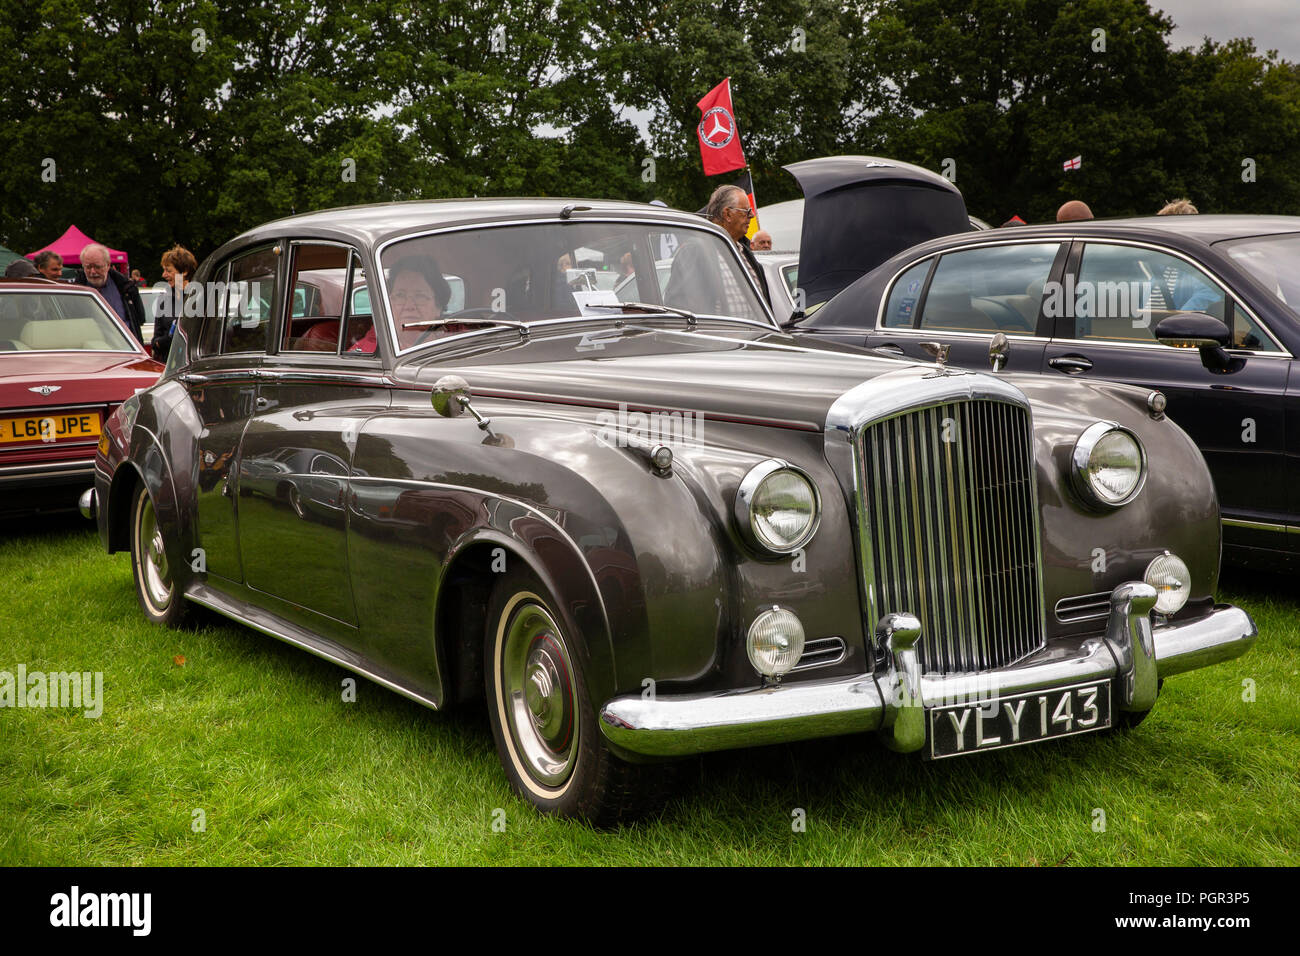 UK, England, Cheshire, Stockport, Woodsmoor Car Show, classic 1960 Bentley S2 saloon car on display Stock Photo